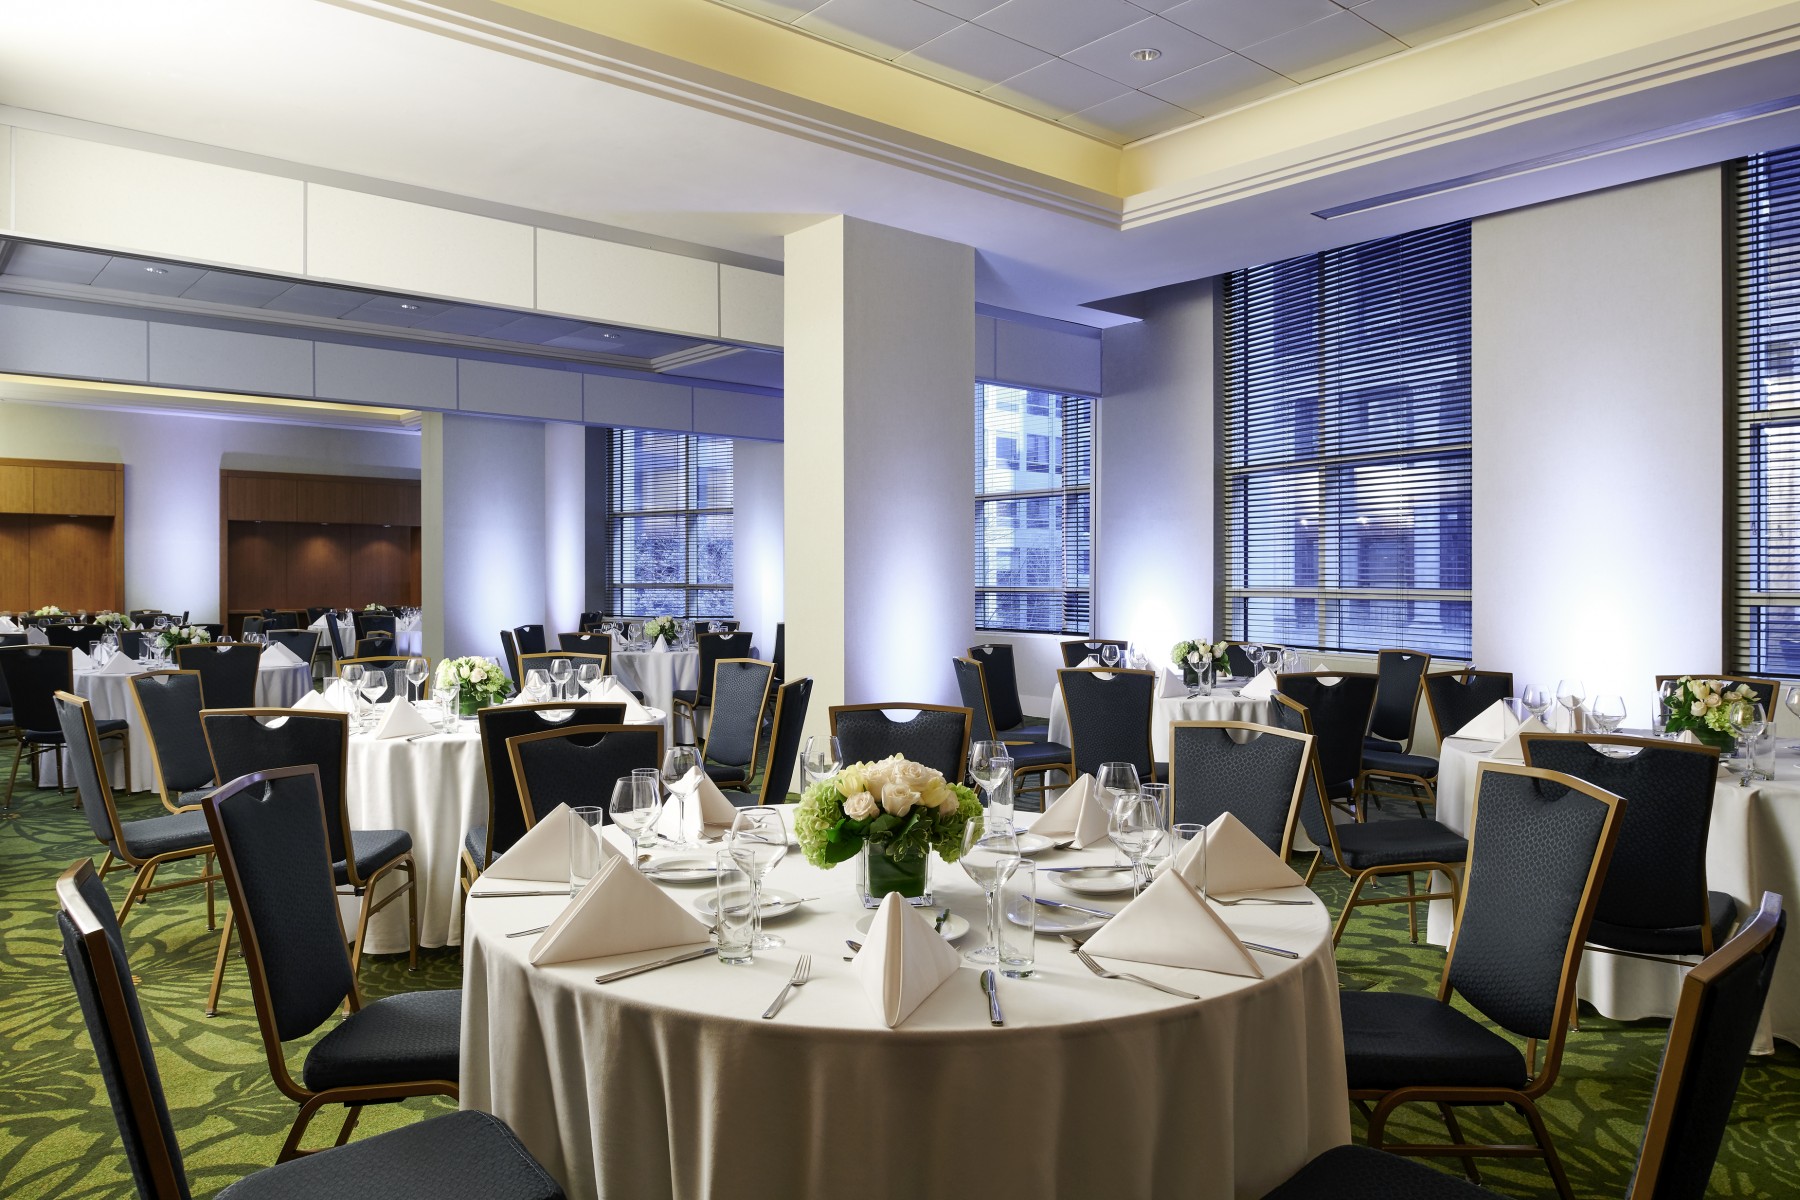 Photo of the hotel Sofitel New York: Saint germain rounds banquet